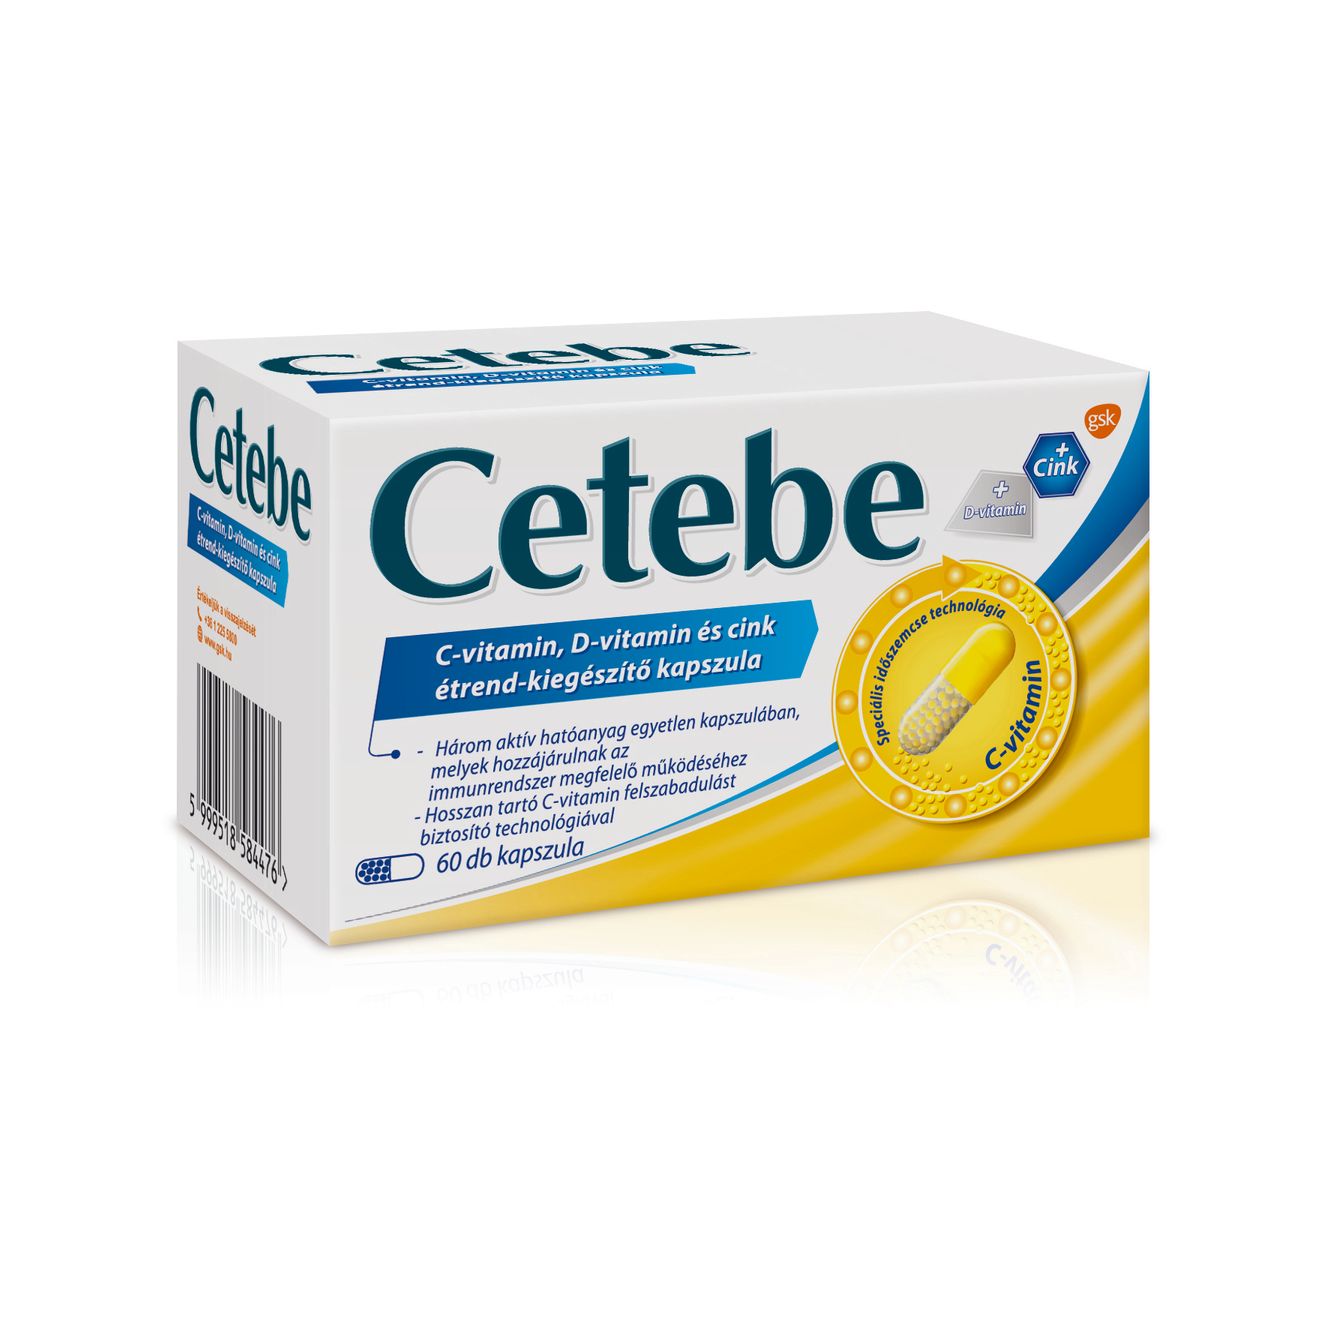 Cetebe Immuntrio C-vitamin, D-vitamin és cink kapszula